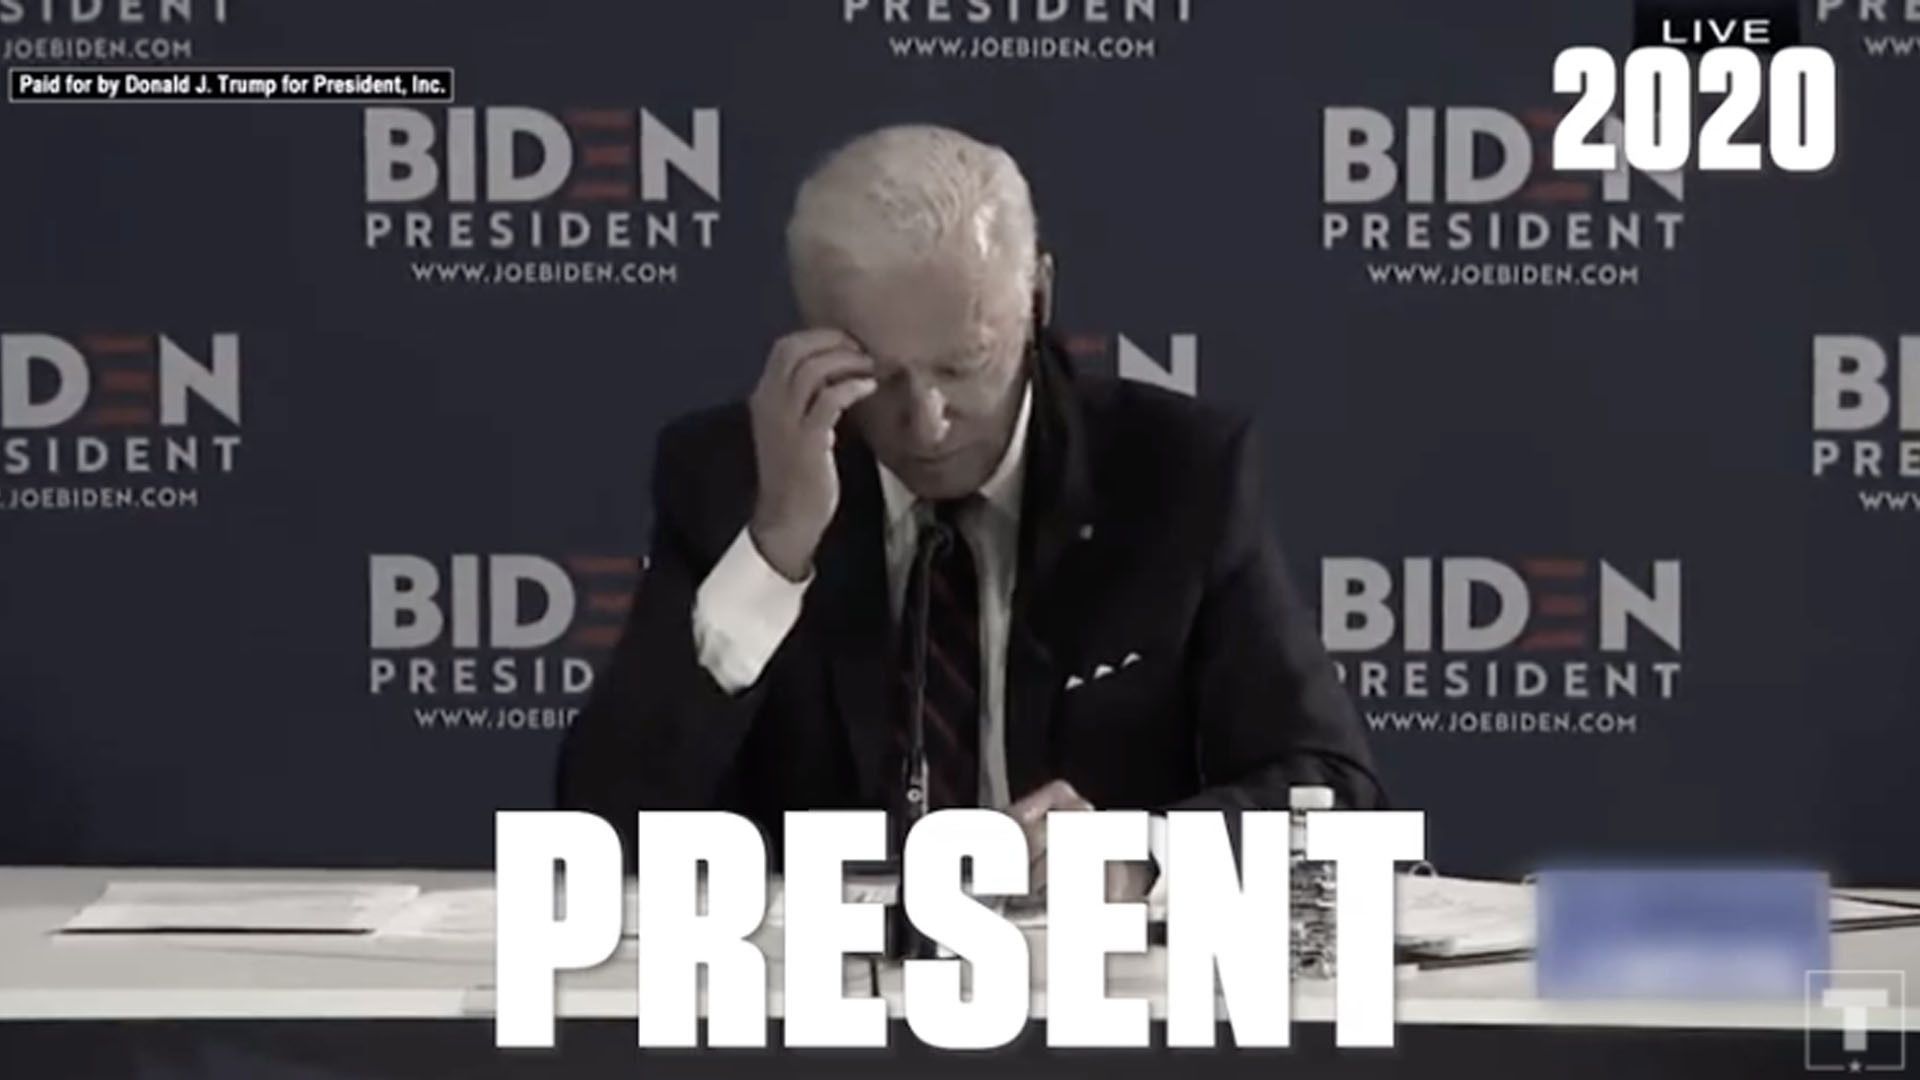 Image of a Trump campaign ad showing Joe Biden looking old